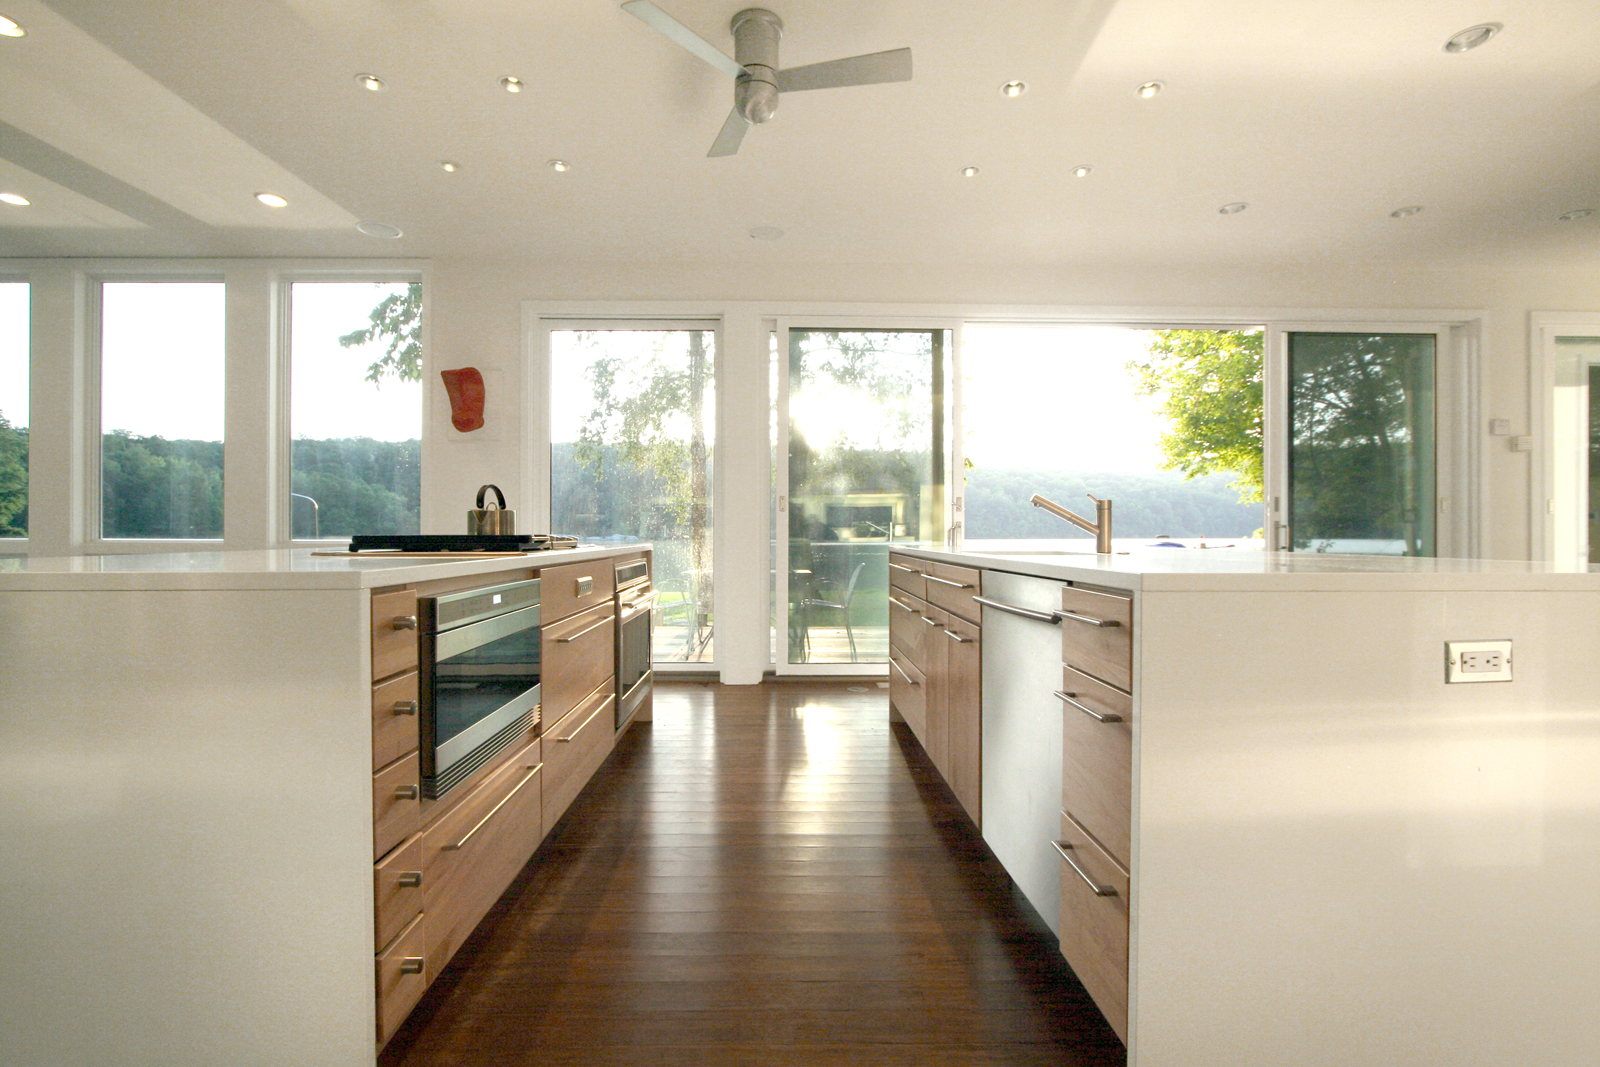 08-res4-resolution-4-architecture-modern-modular-home-prefab-house-lake-iosco-interior-kitchen-02.jpg